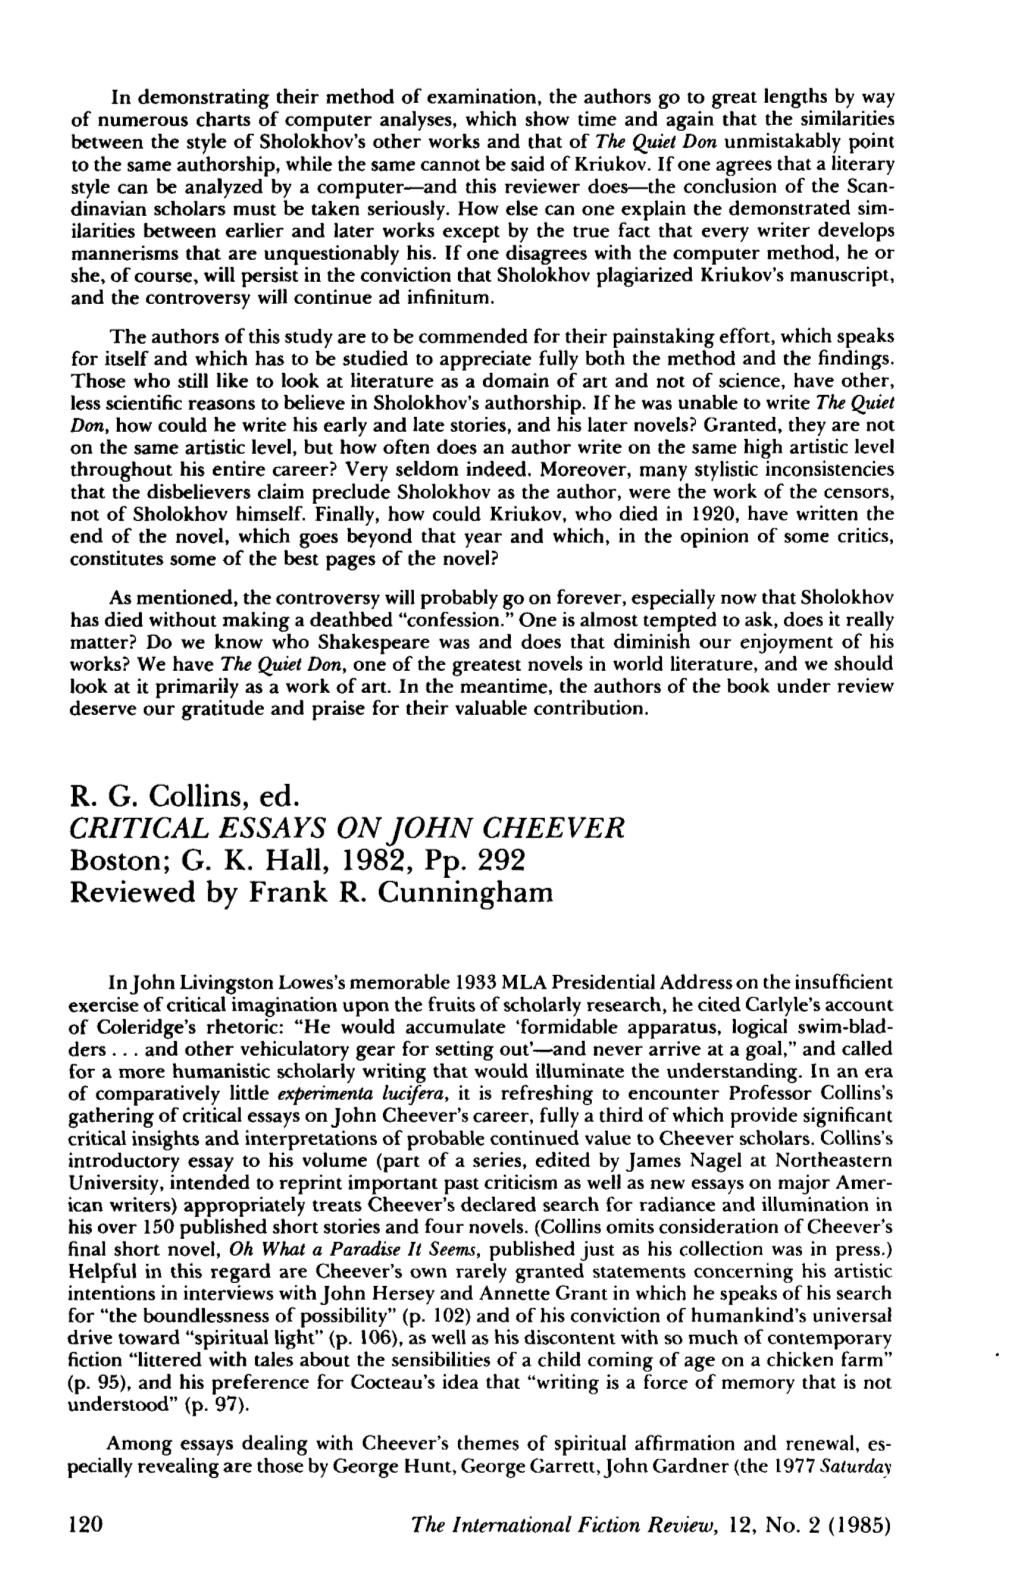 RG Collins, Ed. CRITICAL ESSAYS on JOHN CHEEVER Boston